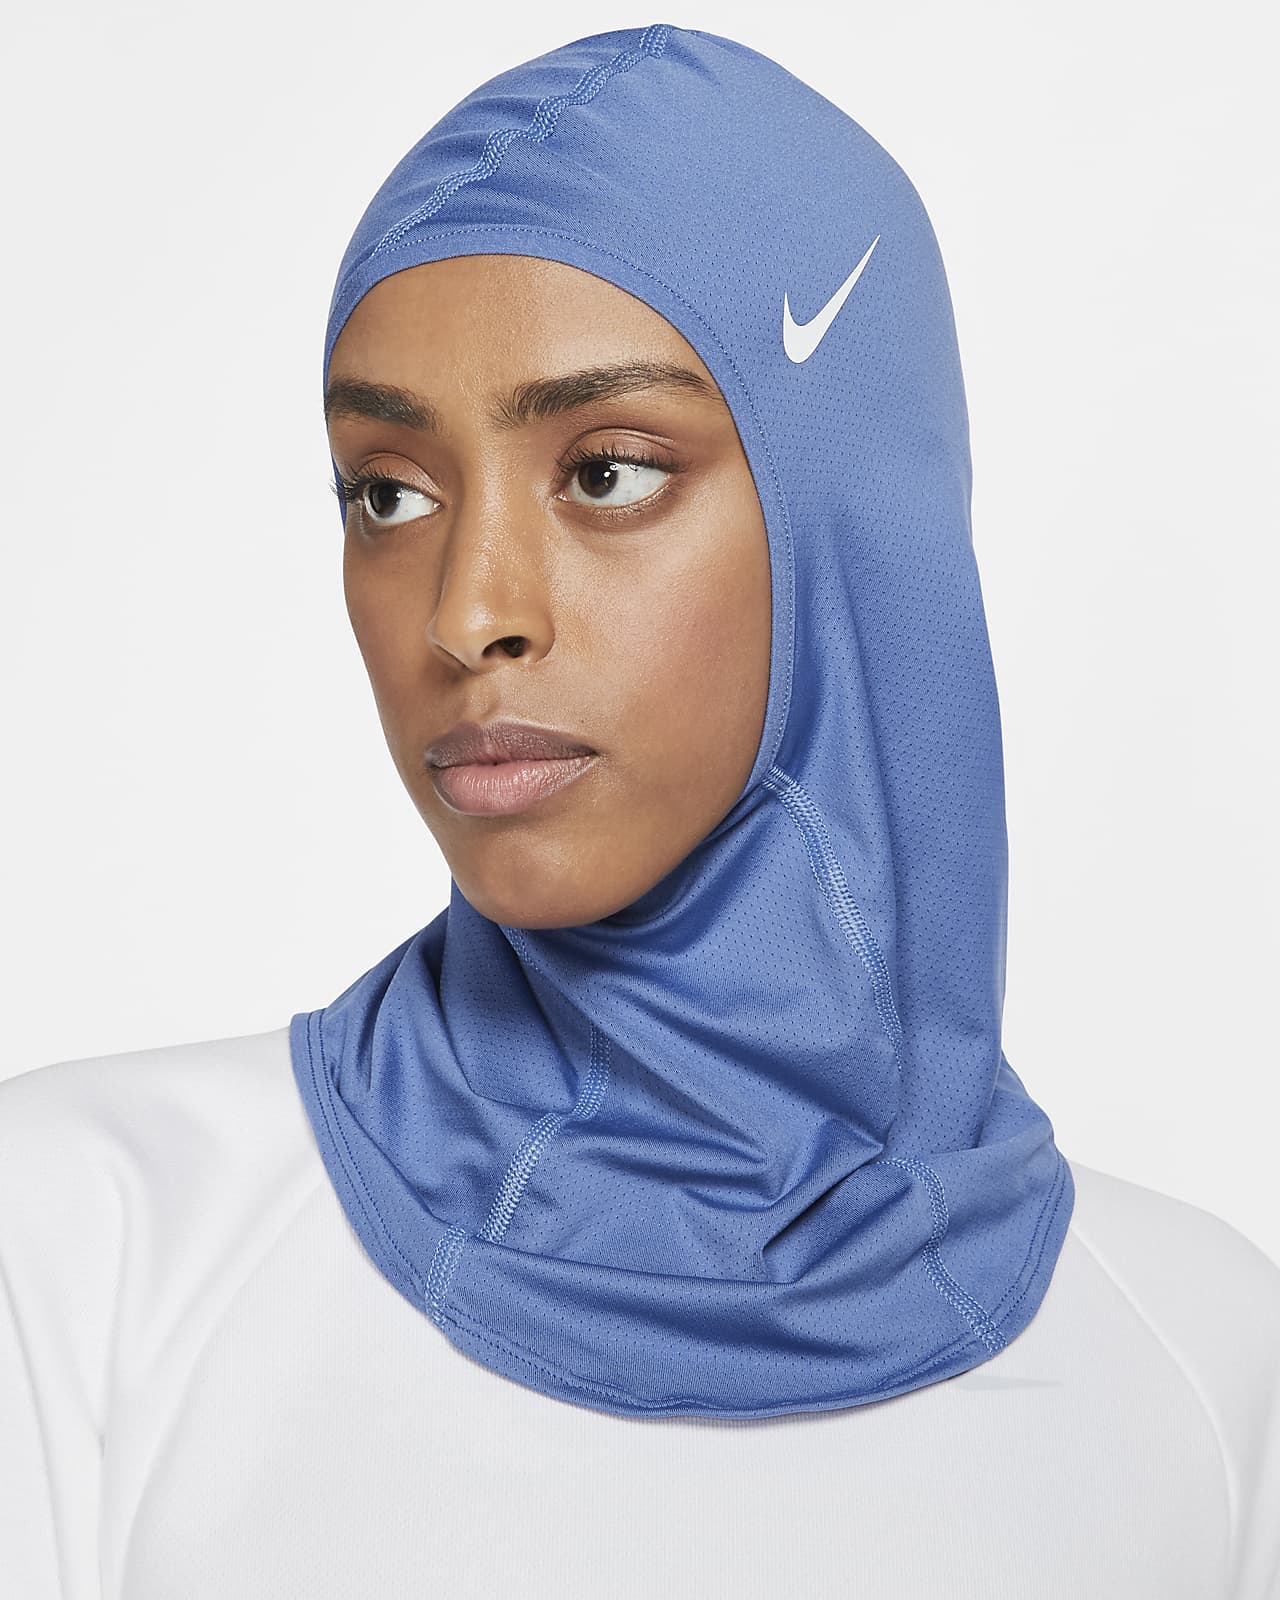 Hijab / Nike Pro Hijab Damen Schwarz Jd Sports